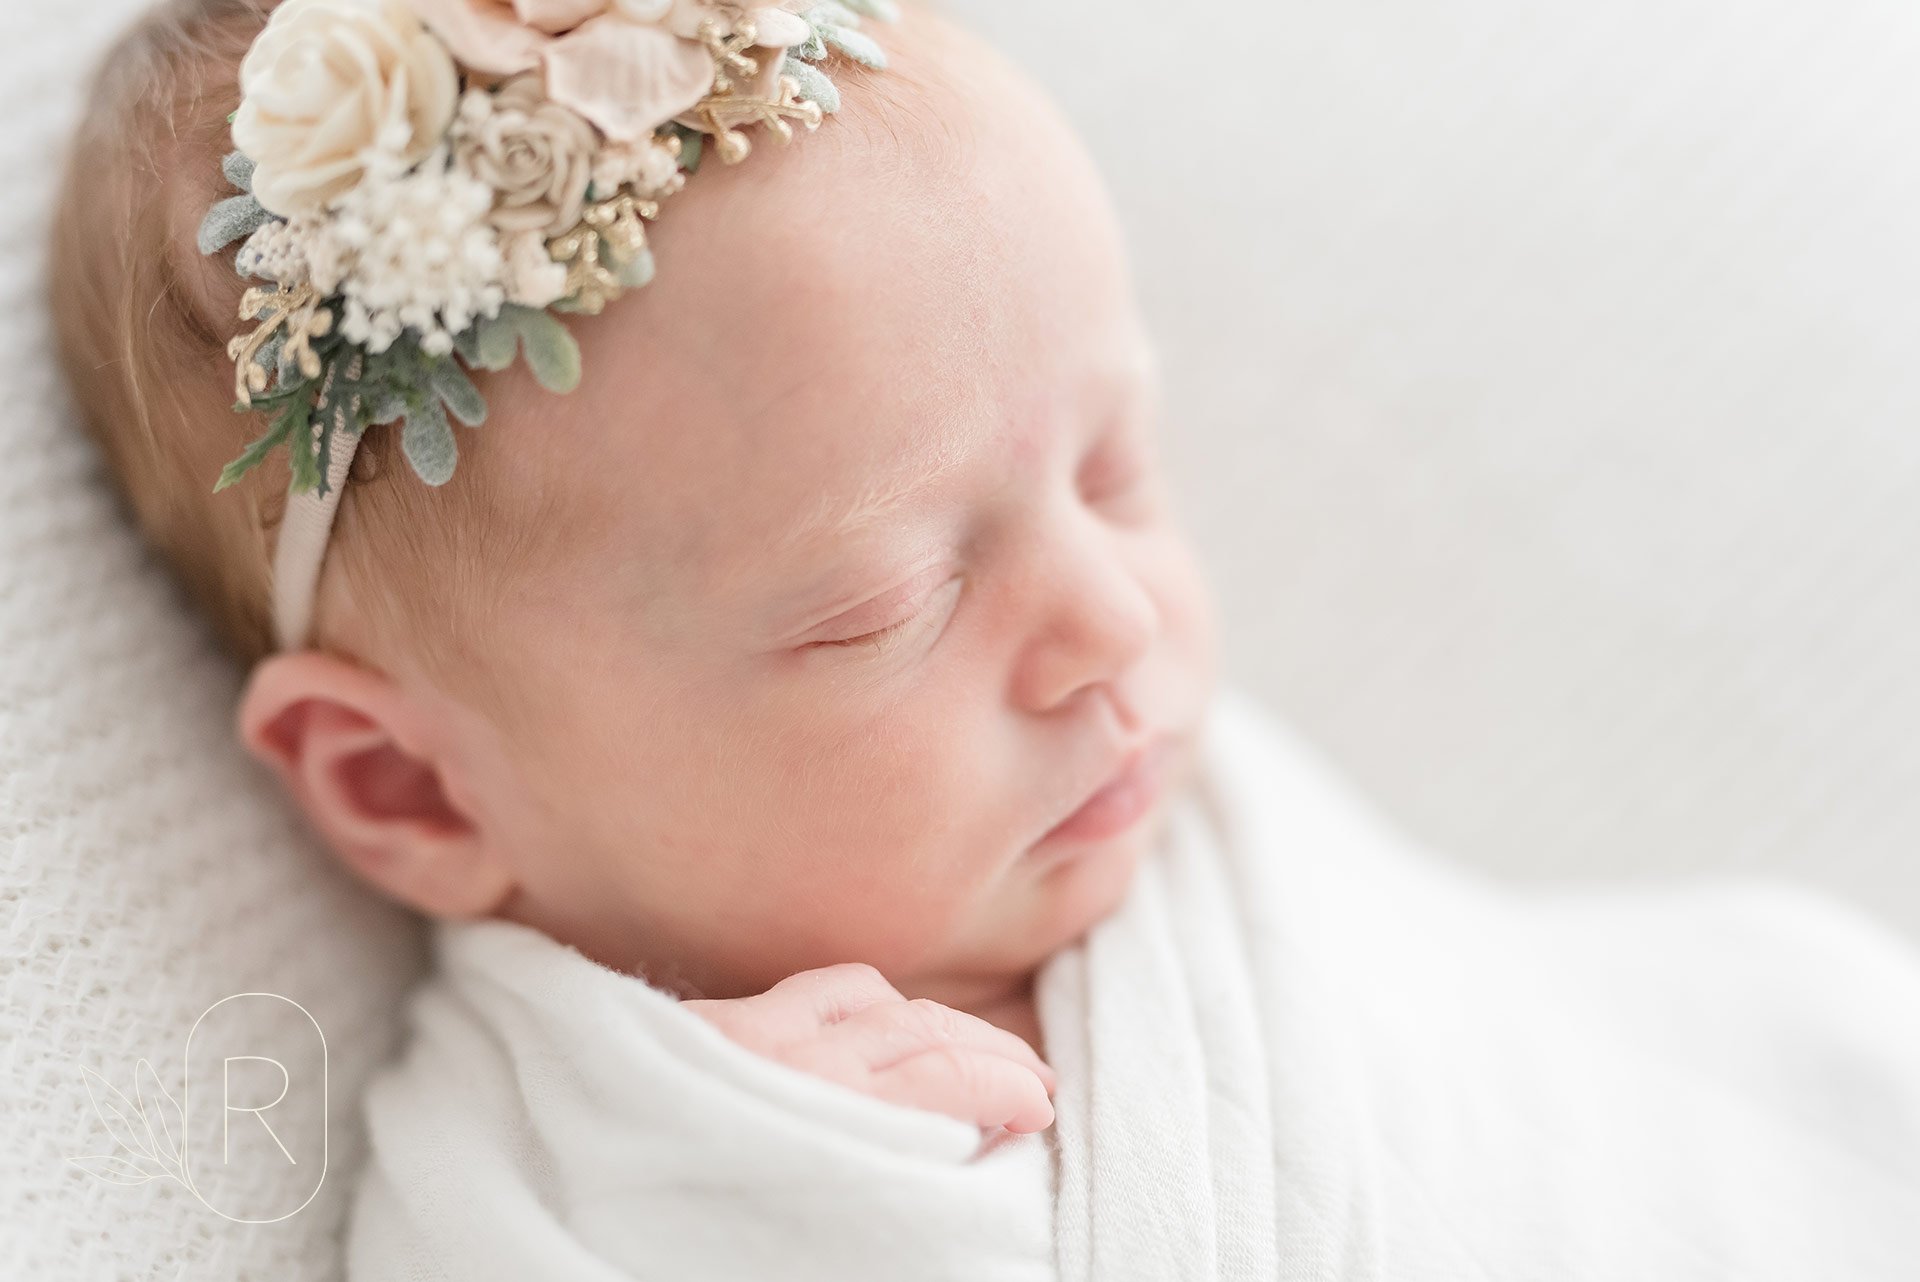 details-of-newborn-family-photography-headband-close-up-niagara-ontario-photographer.jpg